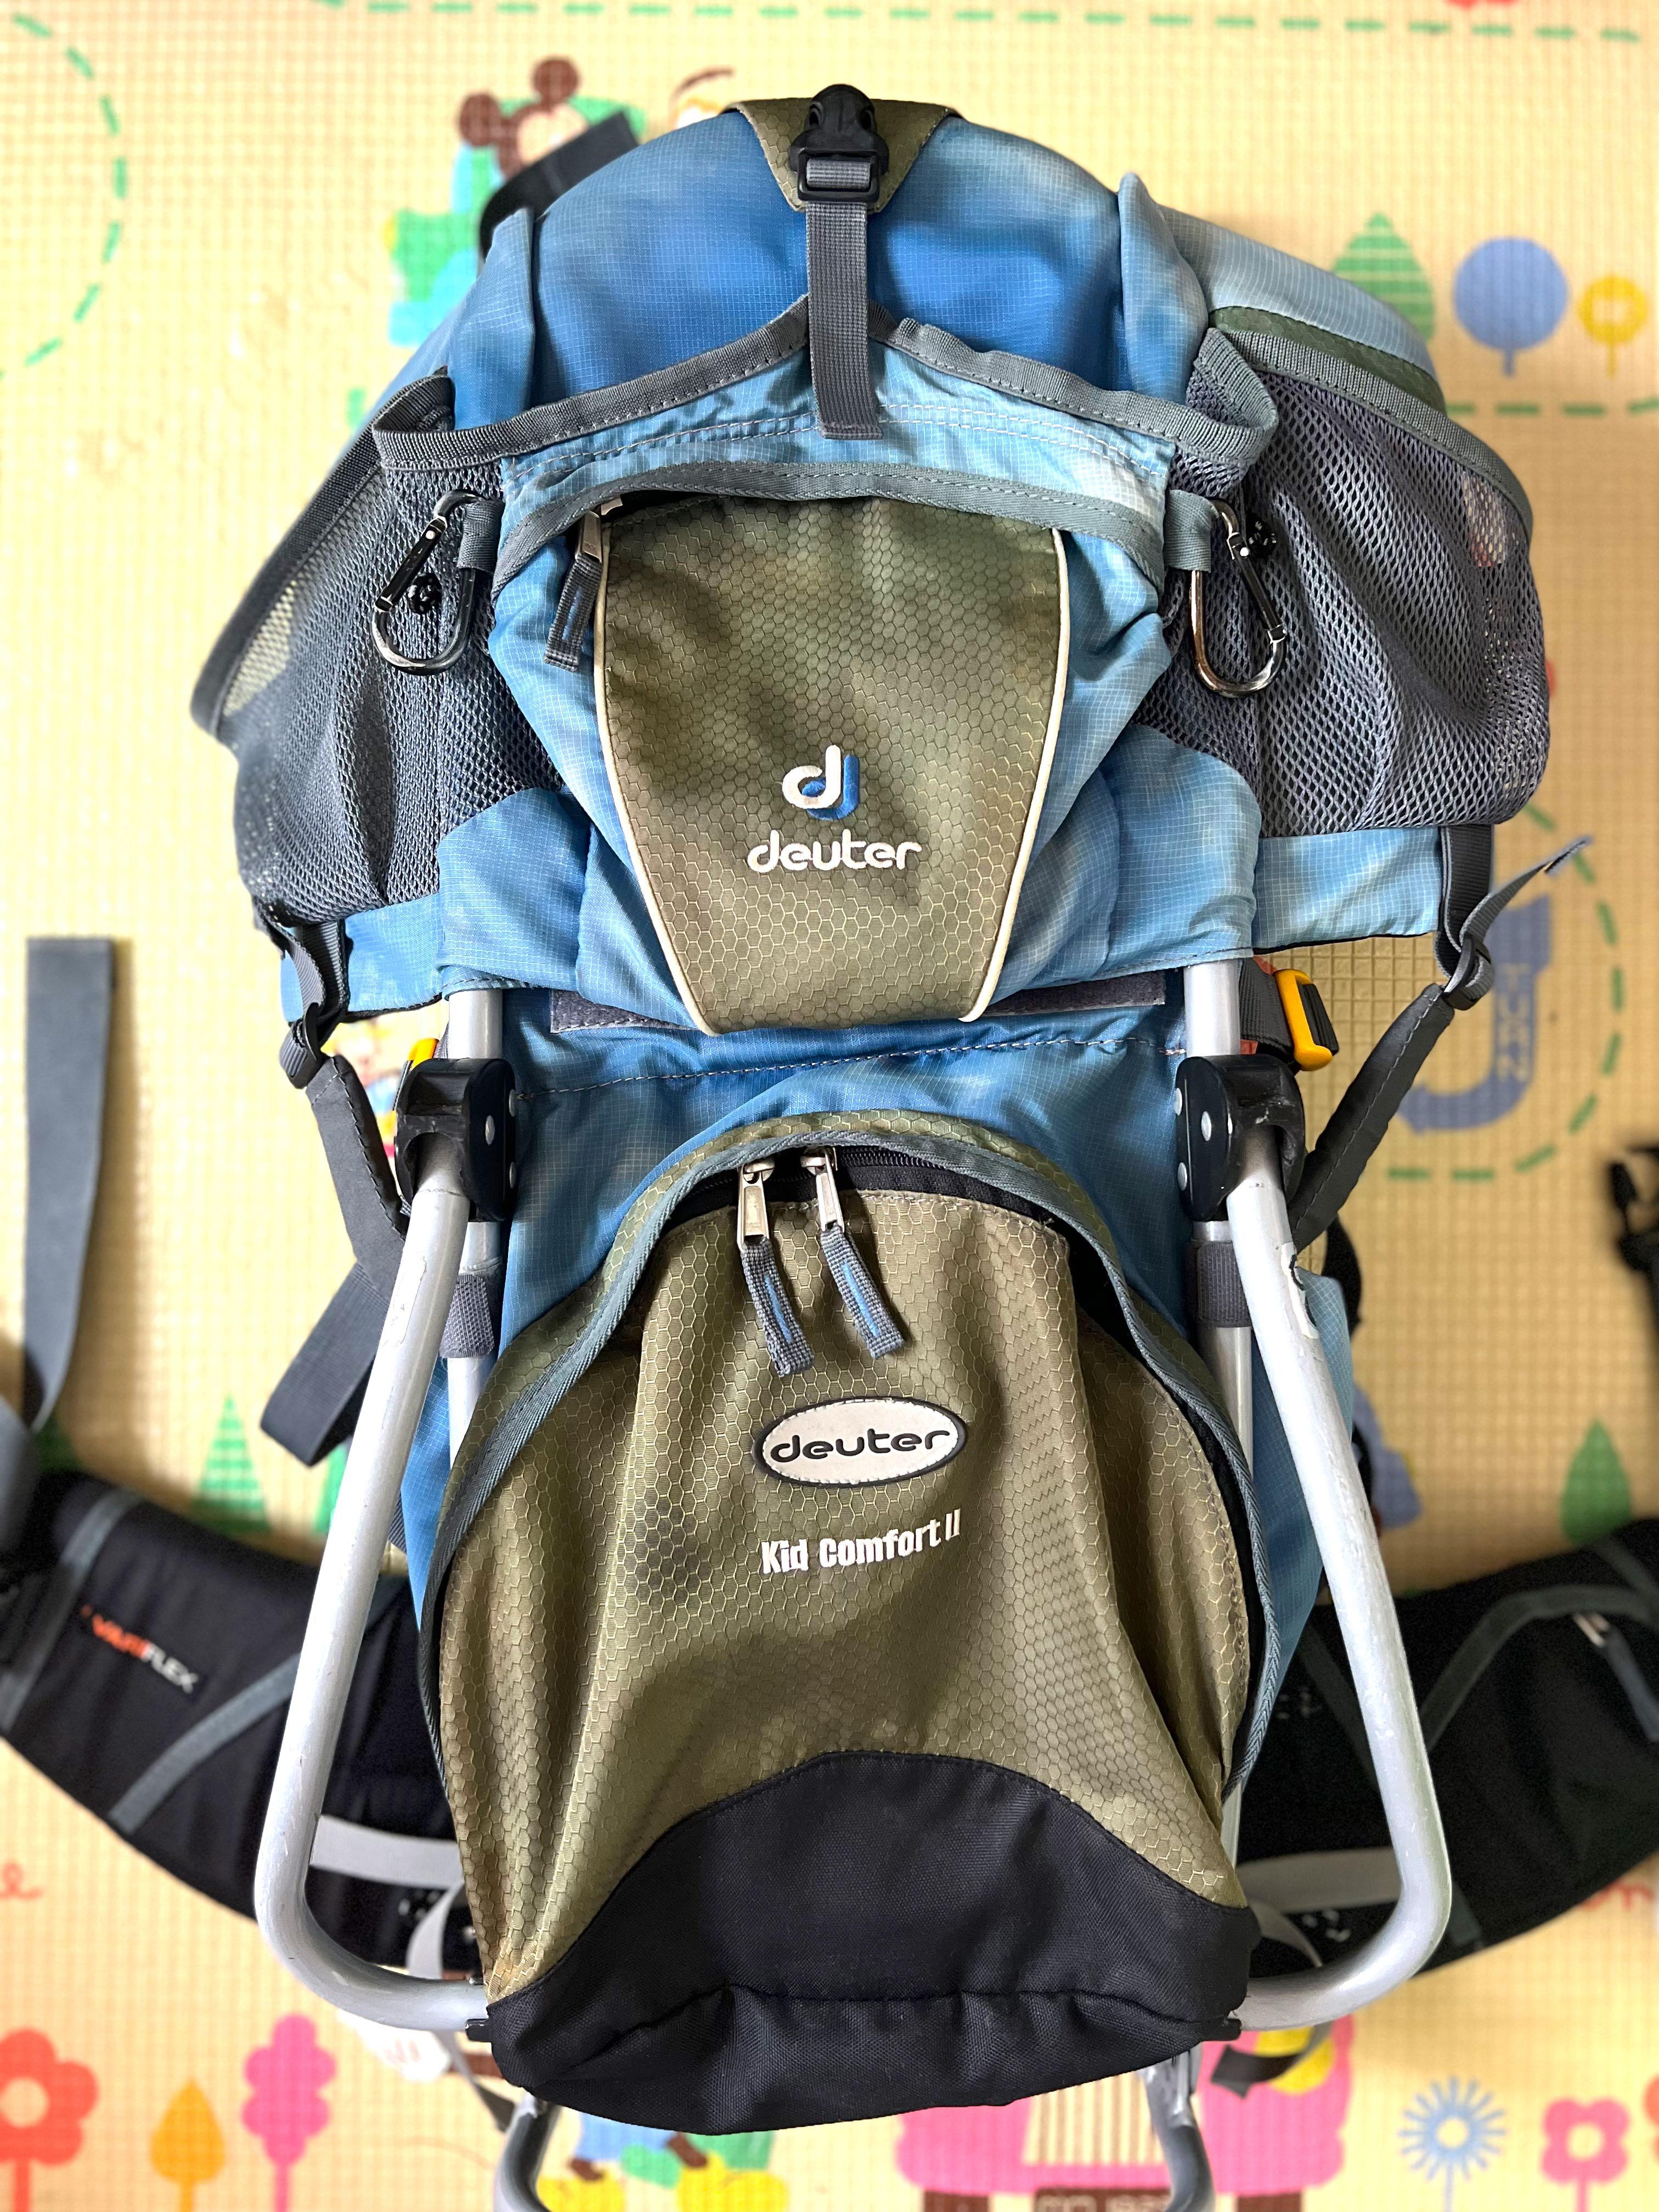 Deuter kid comfort II Deuter child baby hiking carrier backpack  兒童/幼童行山背囊/背架）, 運動產品, 行山及露營- Carousell